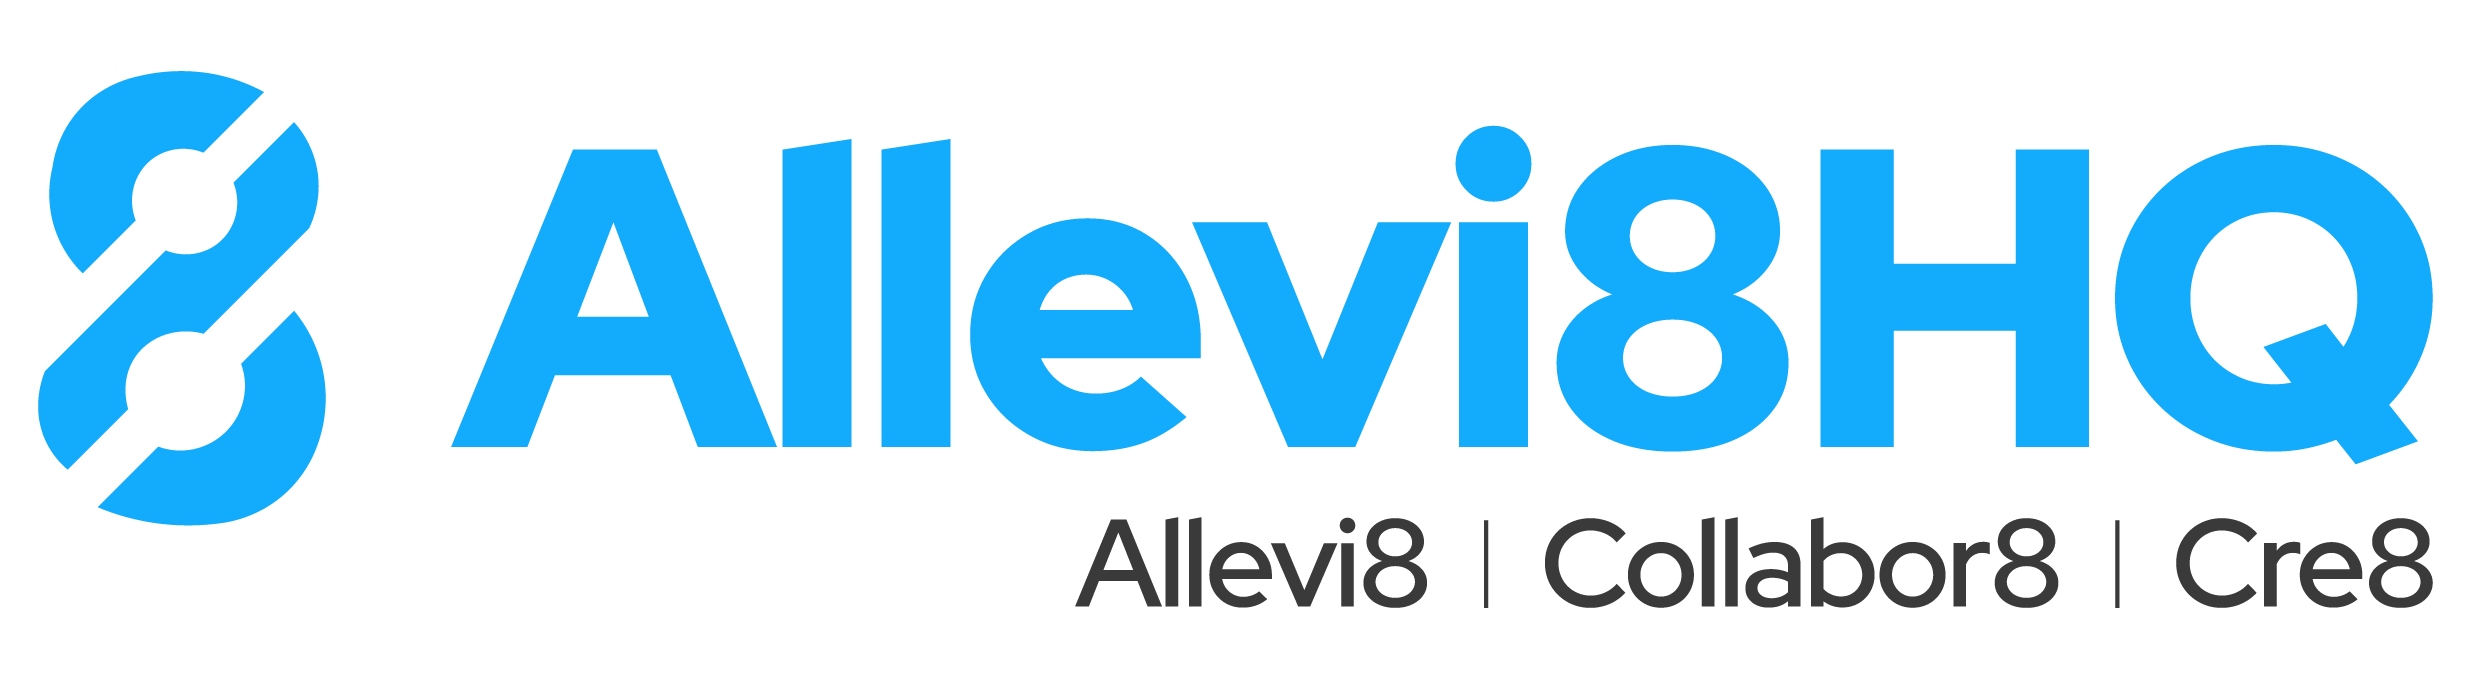 Allevi8HQ Blue Logo